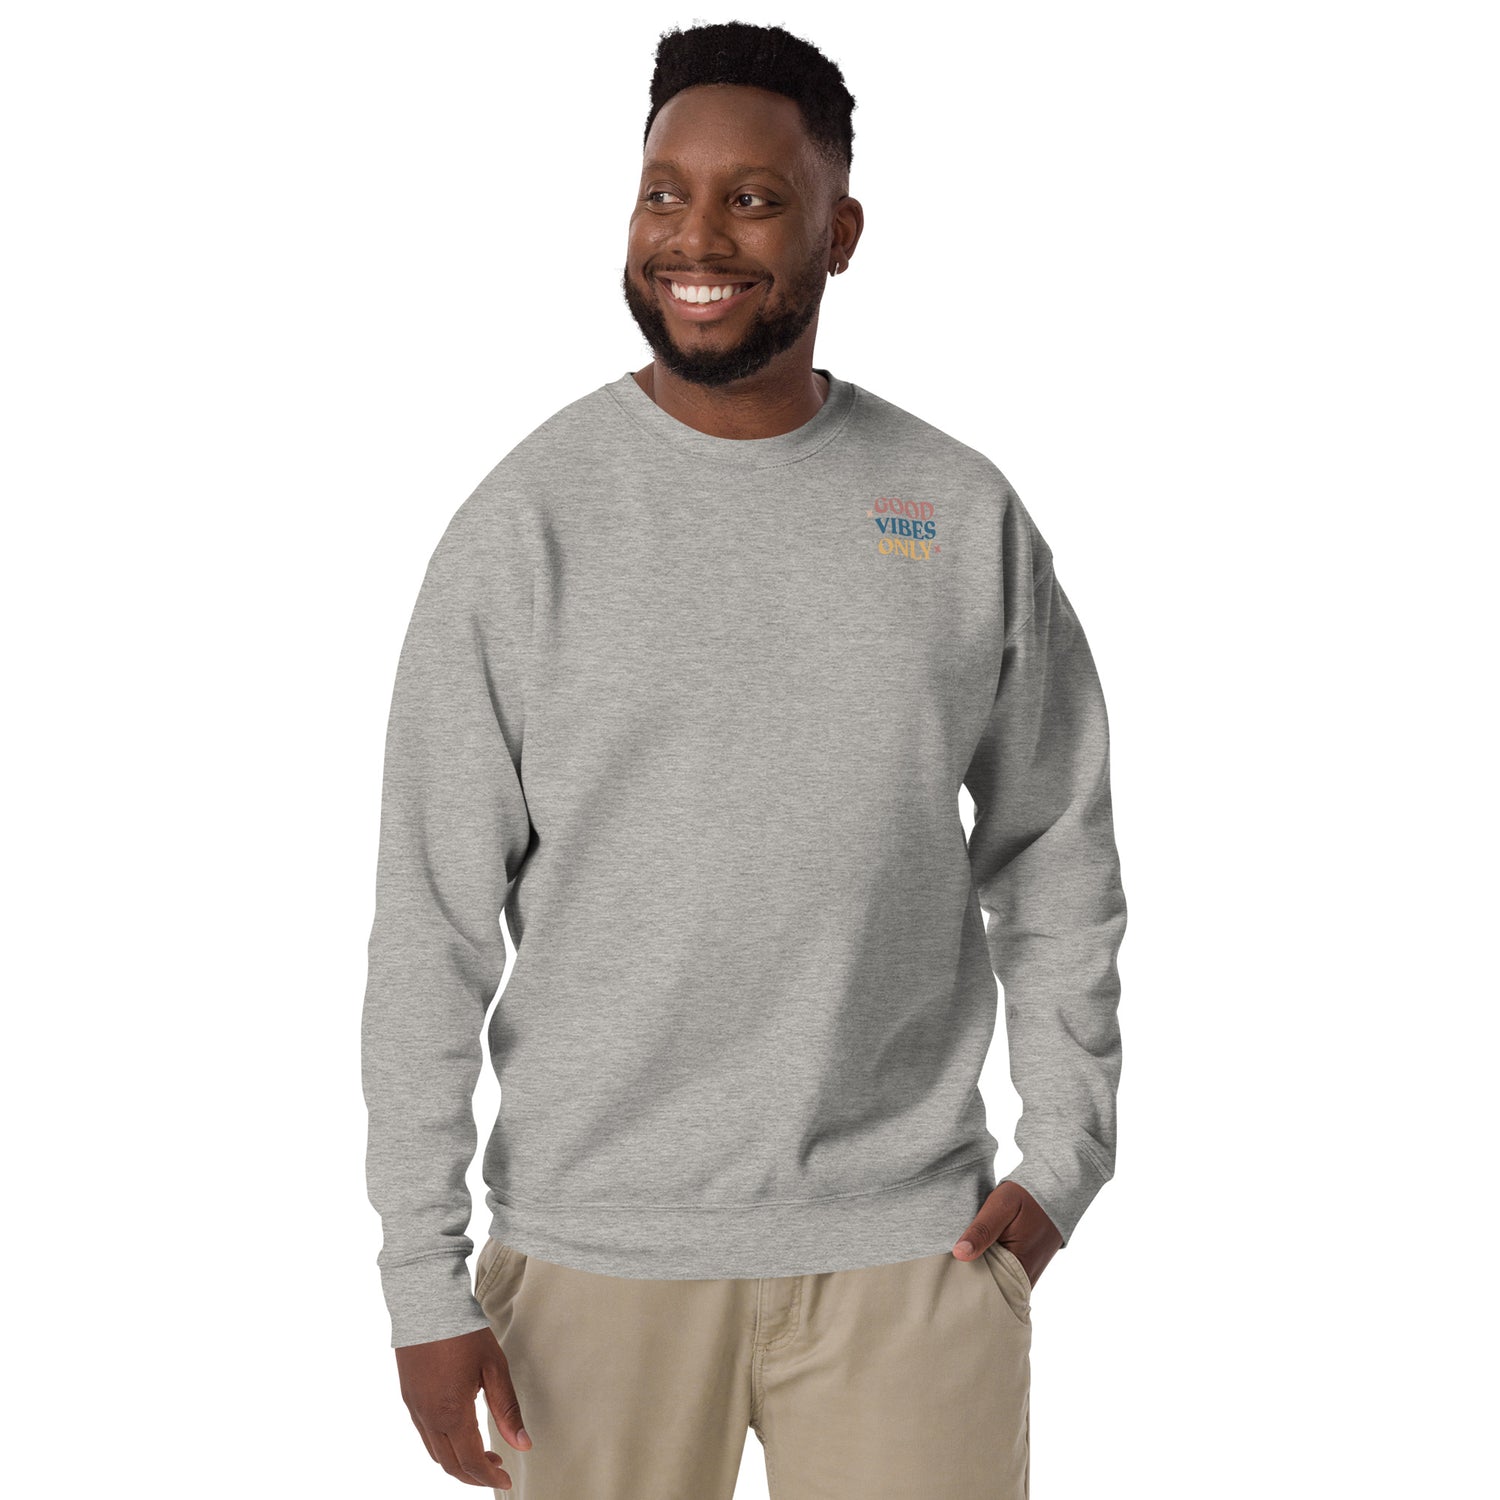 Grey Crewneck Sweatshirt that helps mental health "Good vibes Only".